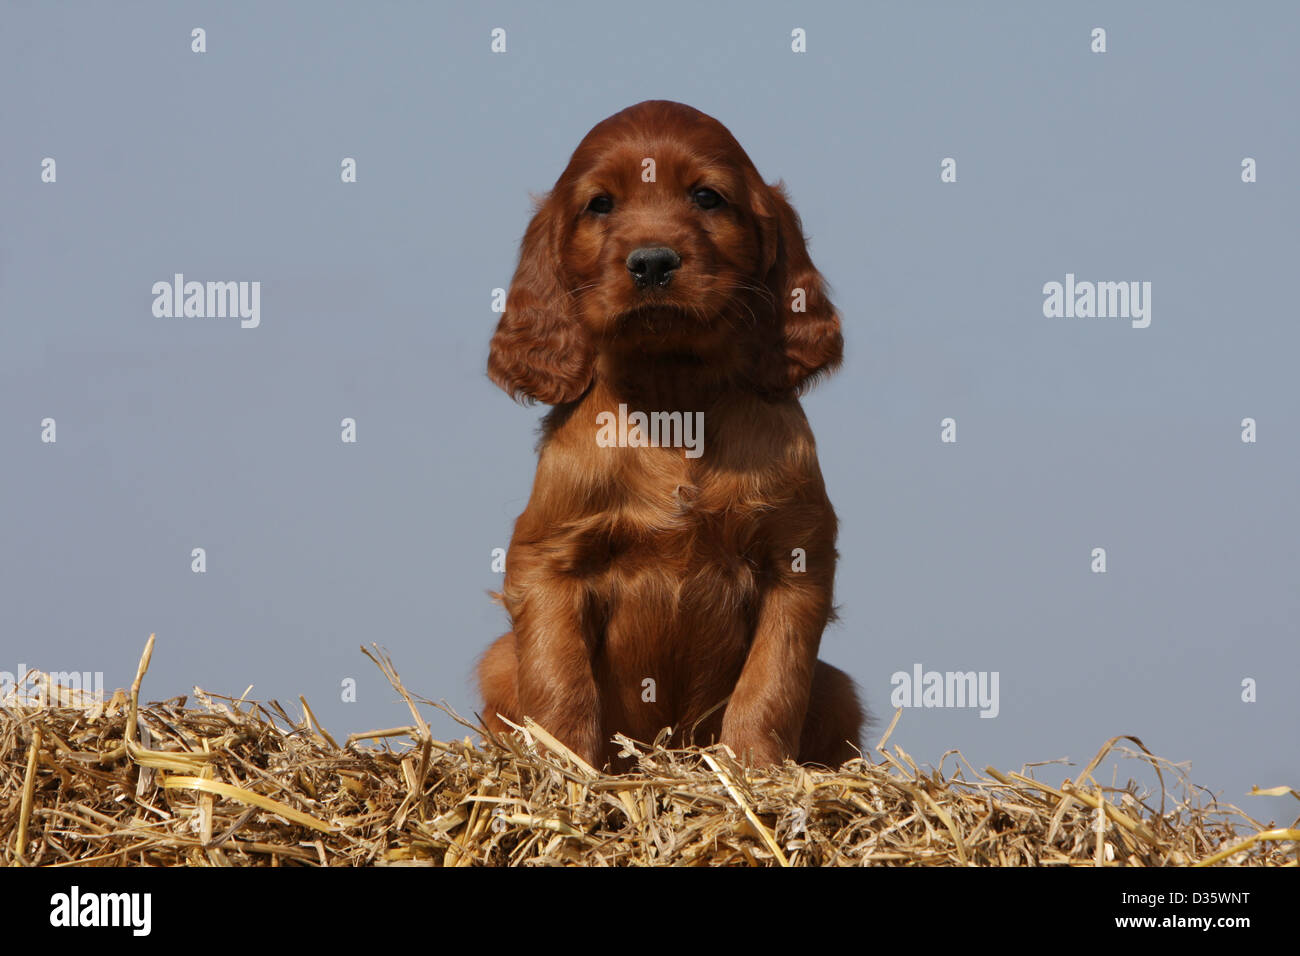 Dog Irish Setter Red Setter Puppy Sitting On The Straw Stock Photo Alamy